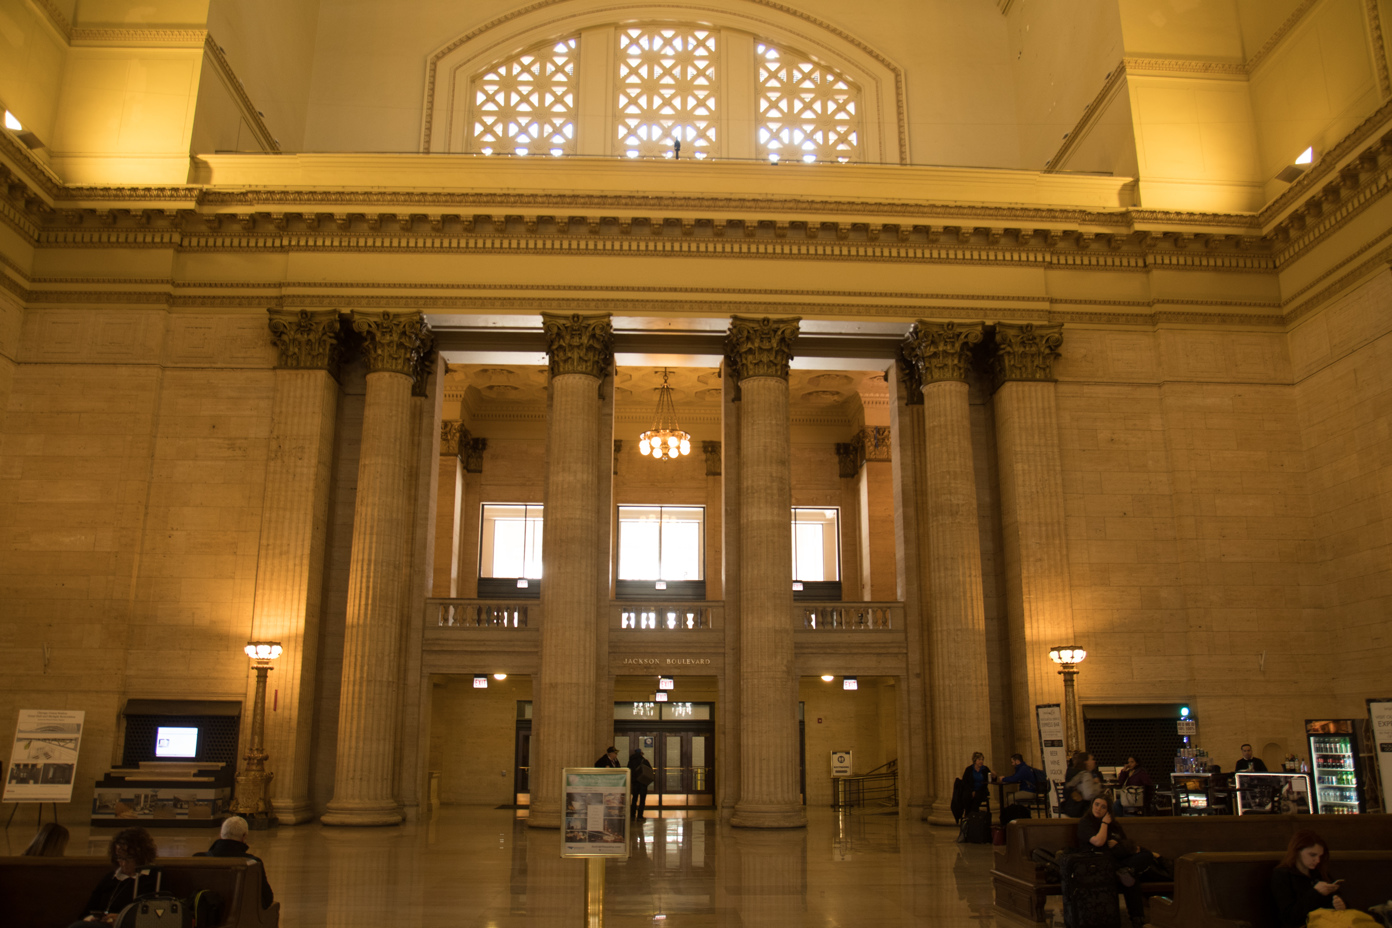 Inside Union Station - Chicago